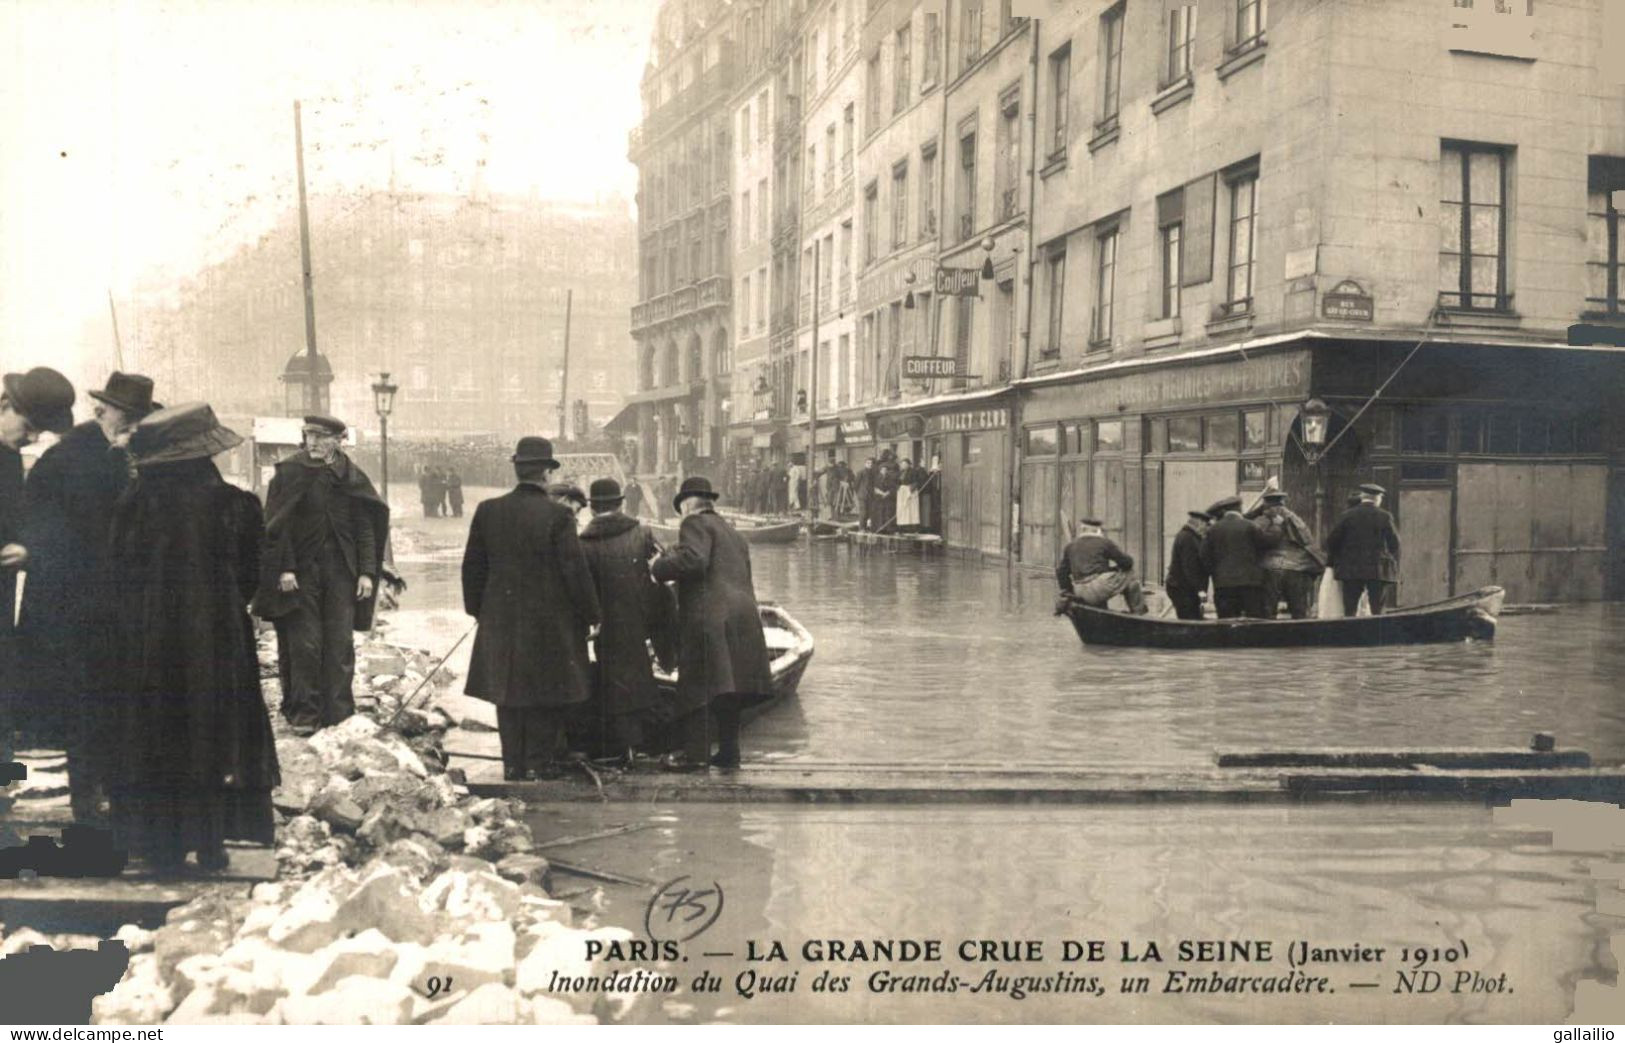 CRUE DE PARIS INONDATION DU QUAI DES GRANDS AUGUSTINS UN EMBARCADERE - Paris Flood, 1910